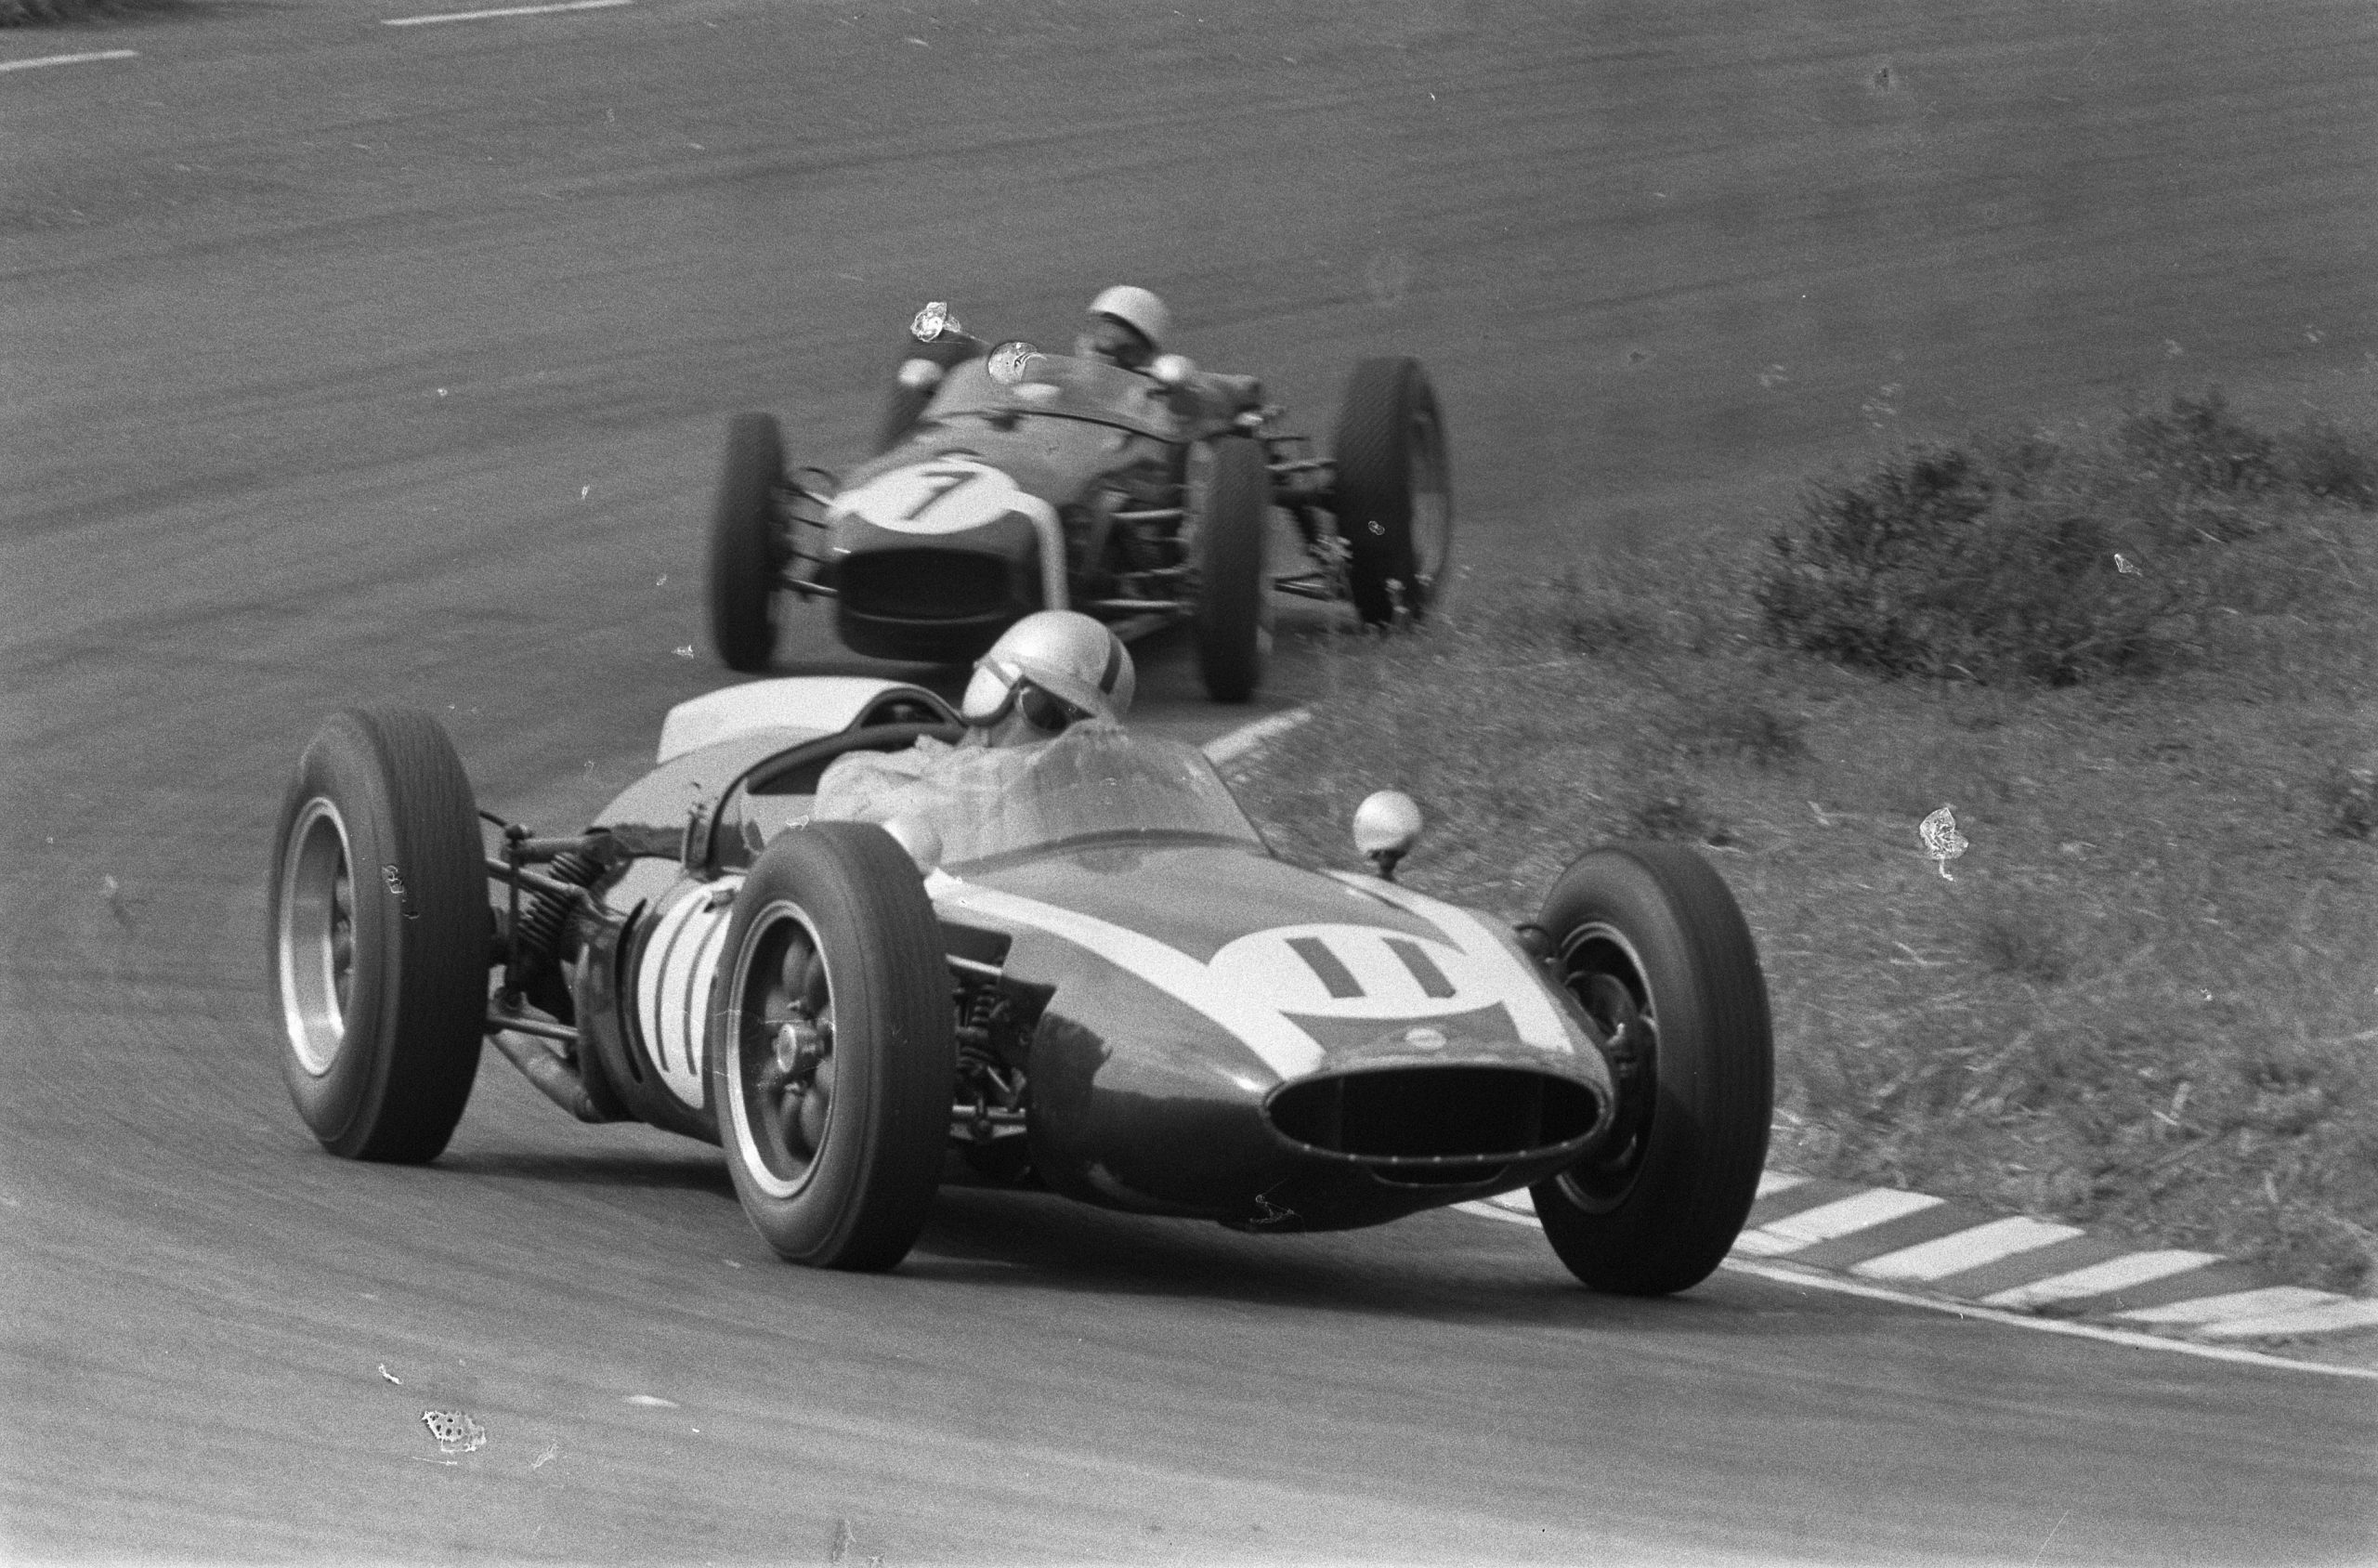 Formula 1 - 70 de ani